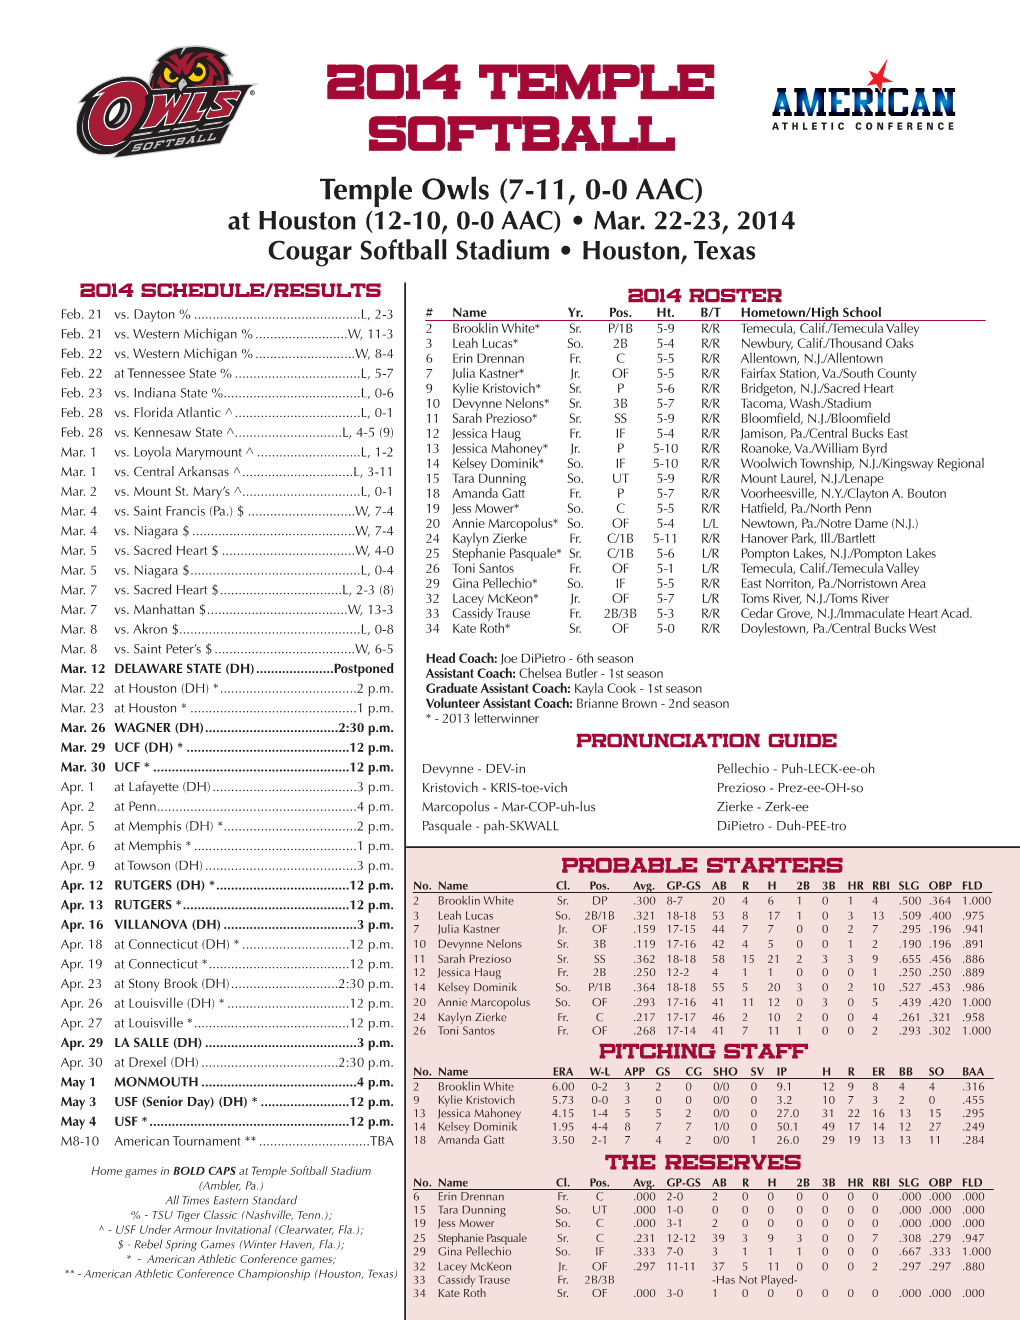 2014 Temple Softball Temple Owls (7-11, 0-0 AAC) at Houston (12-10, 0-0 AAC) • Mar